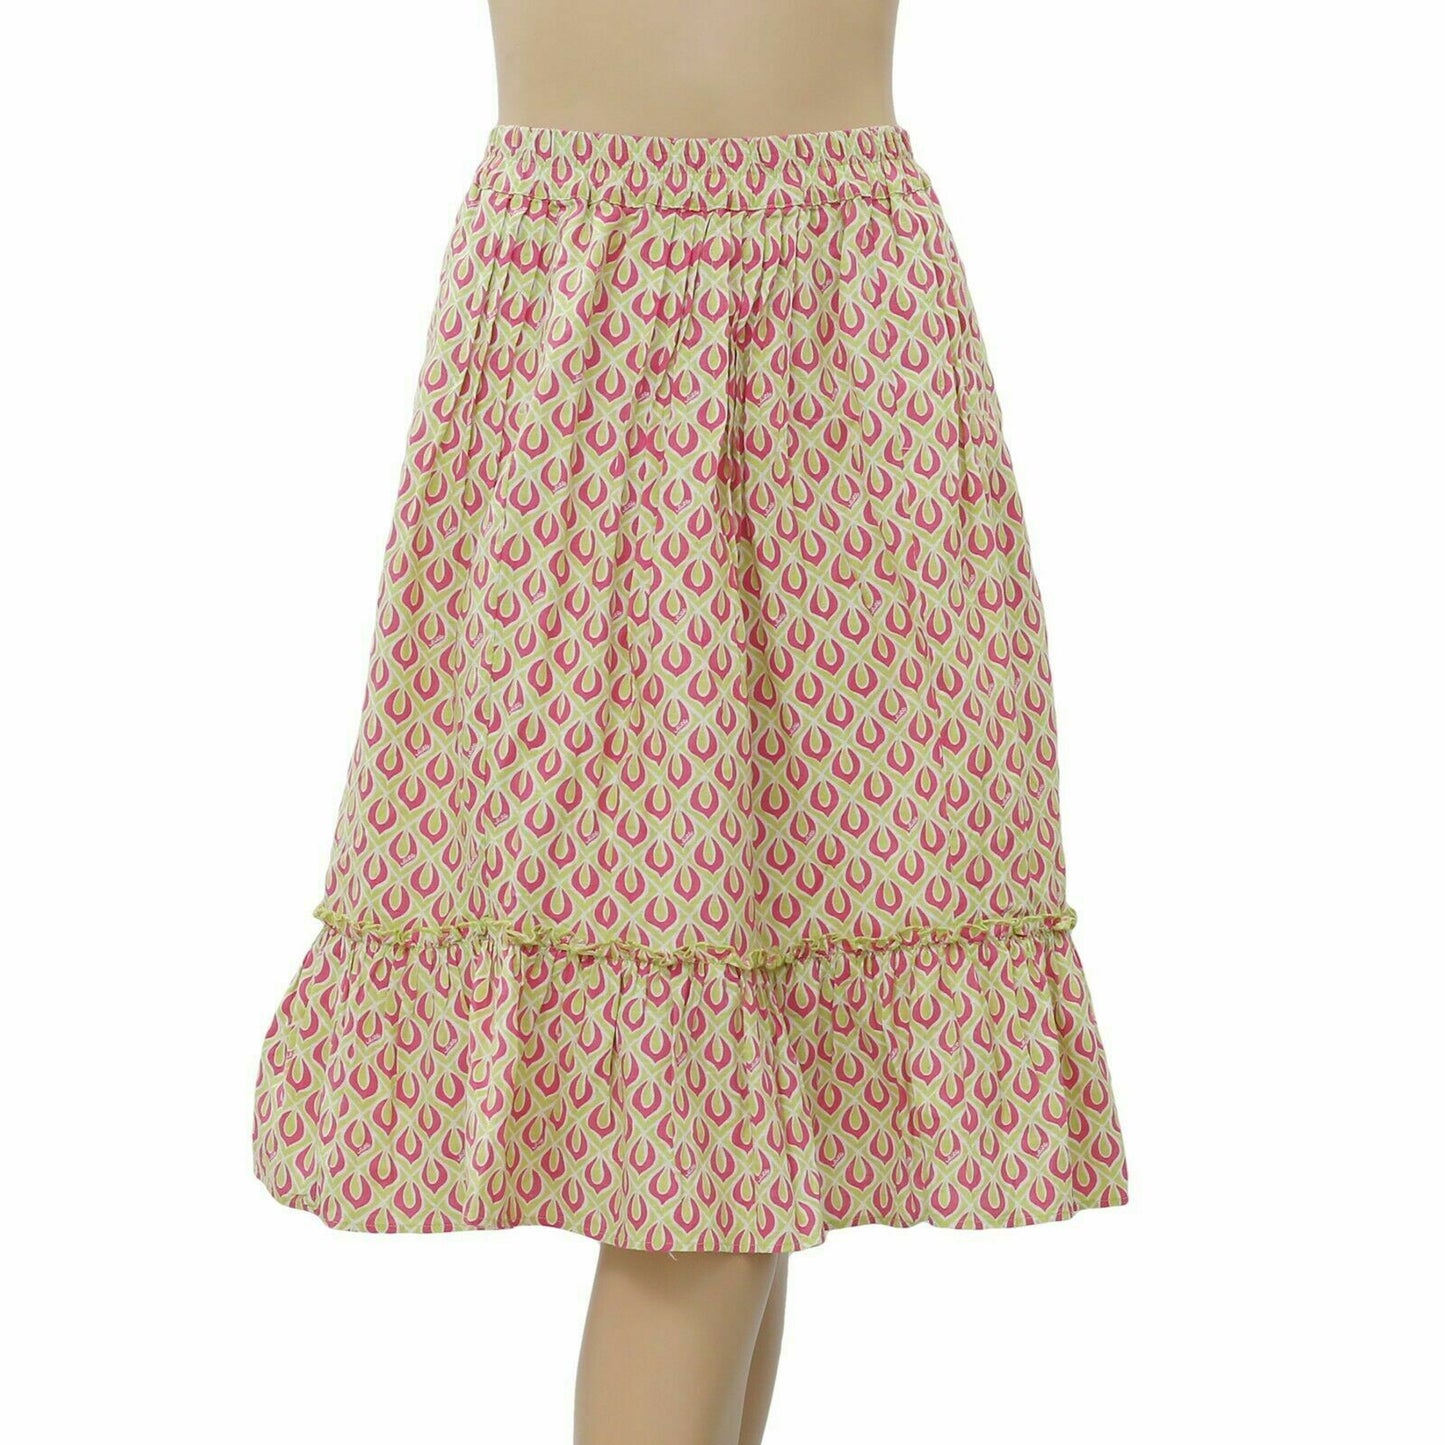 Lilly Pulitzer Block Printed Skirt